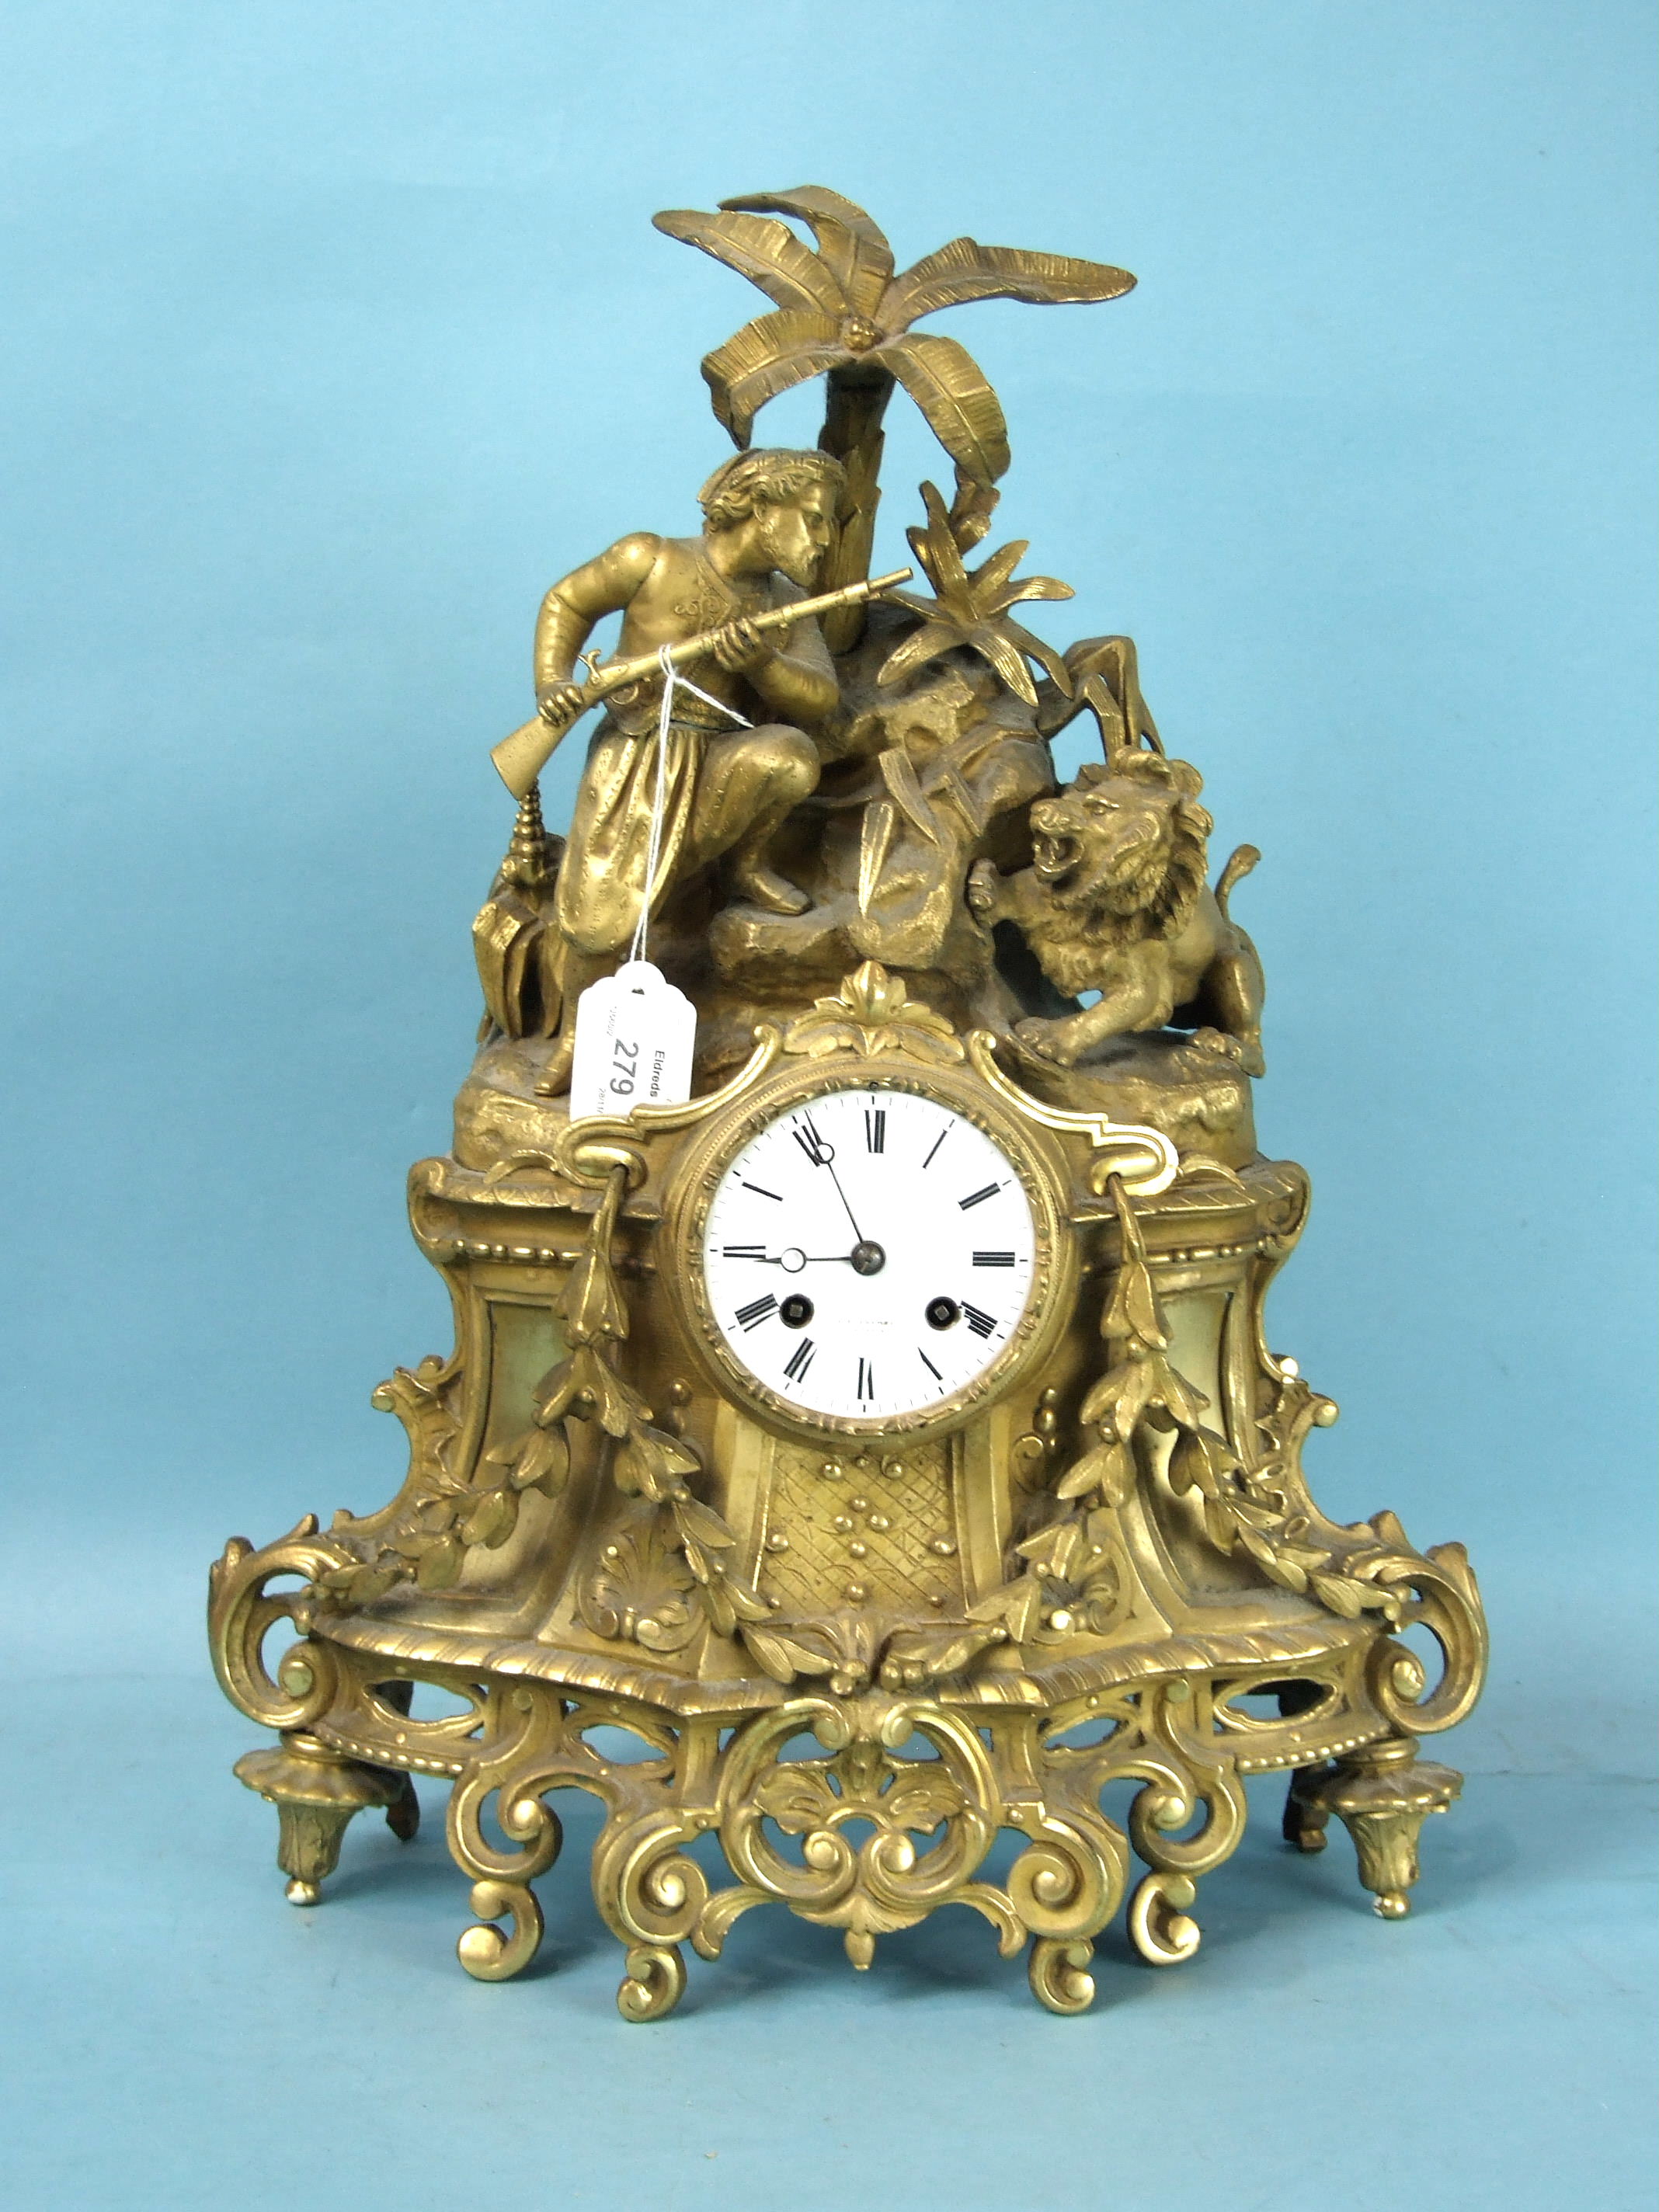 C F Crewes À Paris, a 19th century gilt metal mantel clock, the case surmounted by a lion and